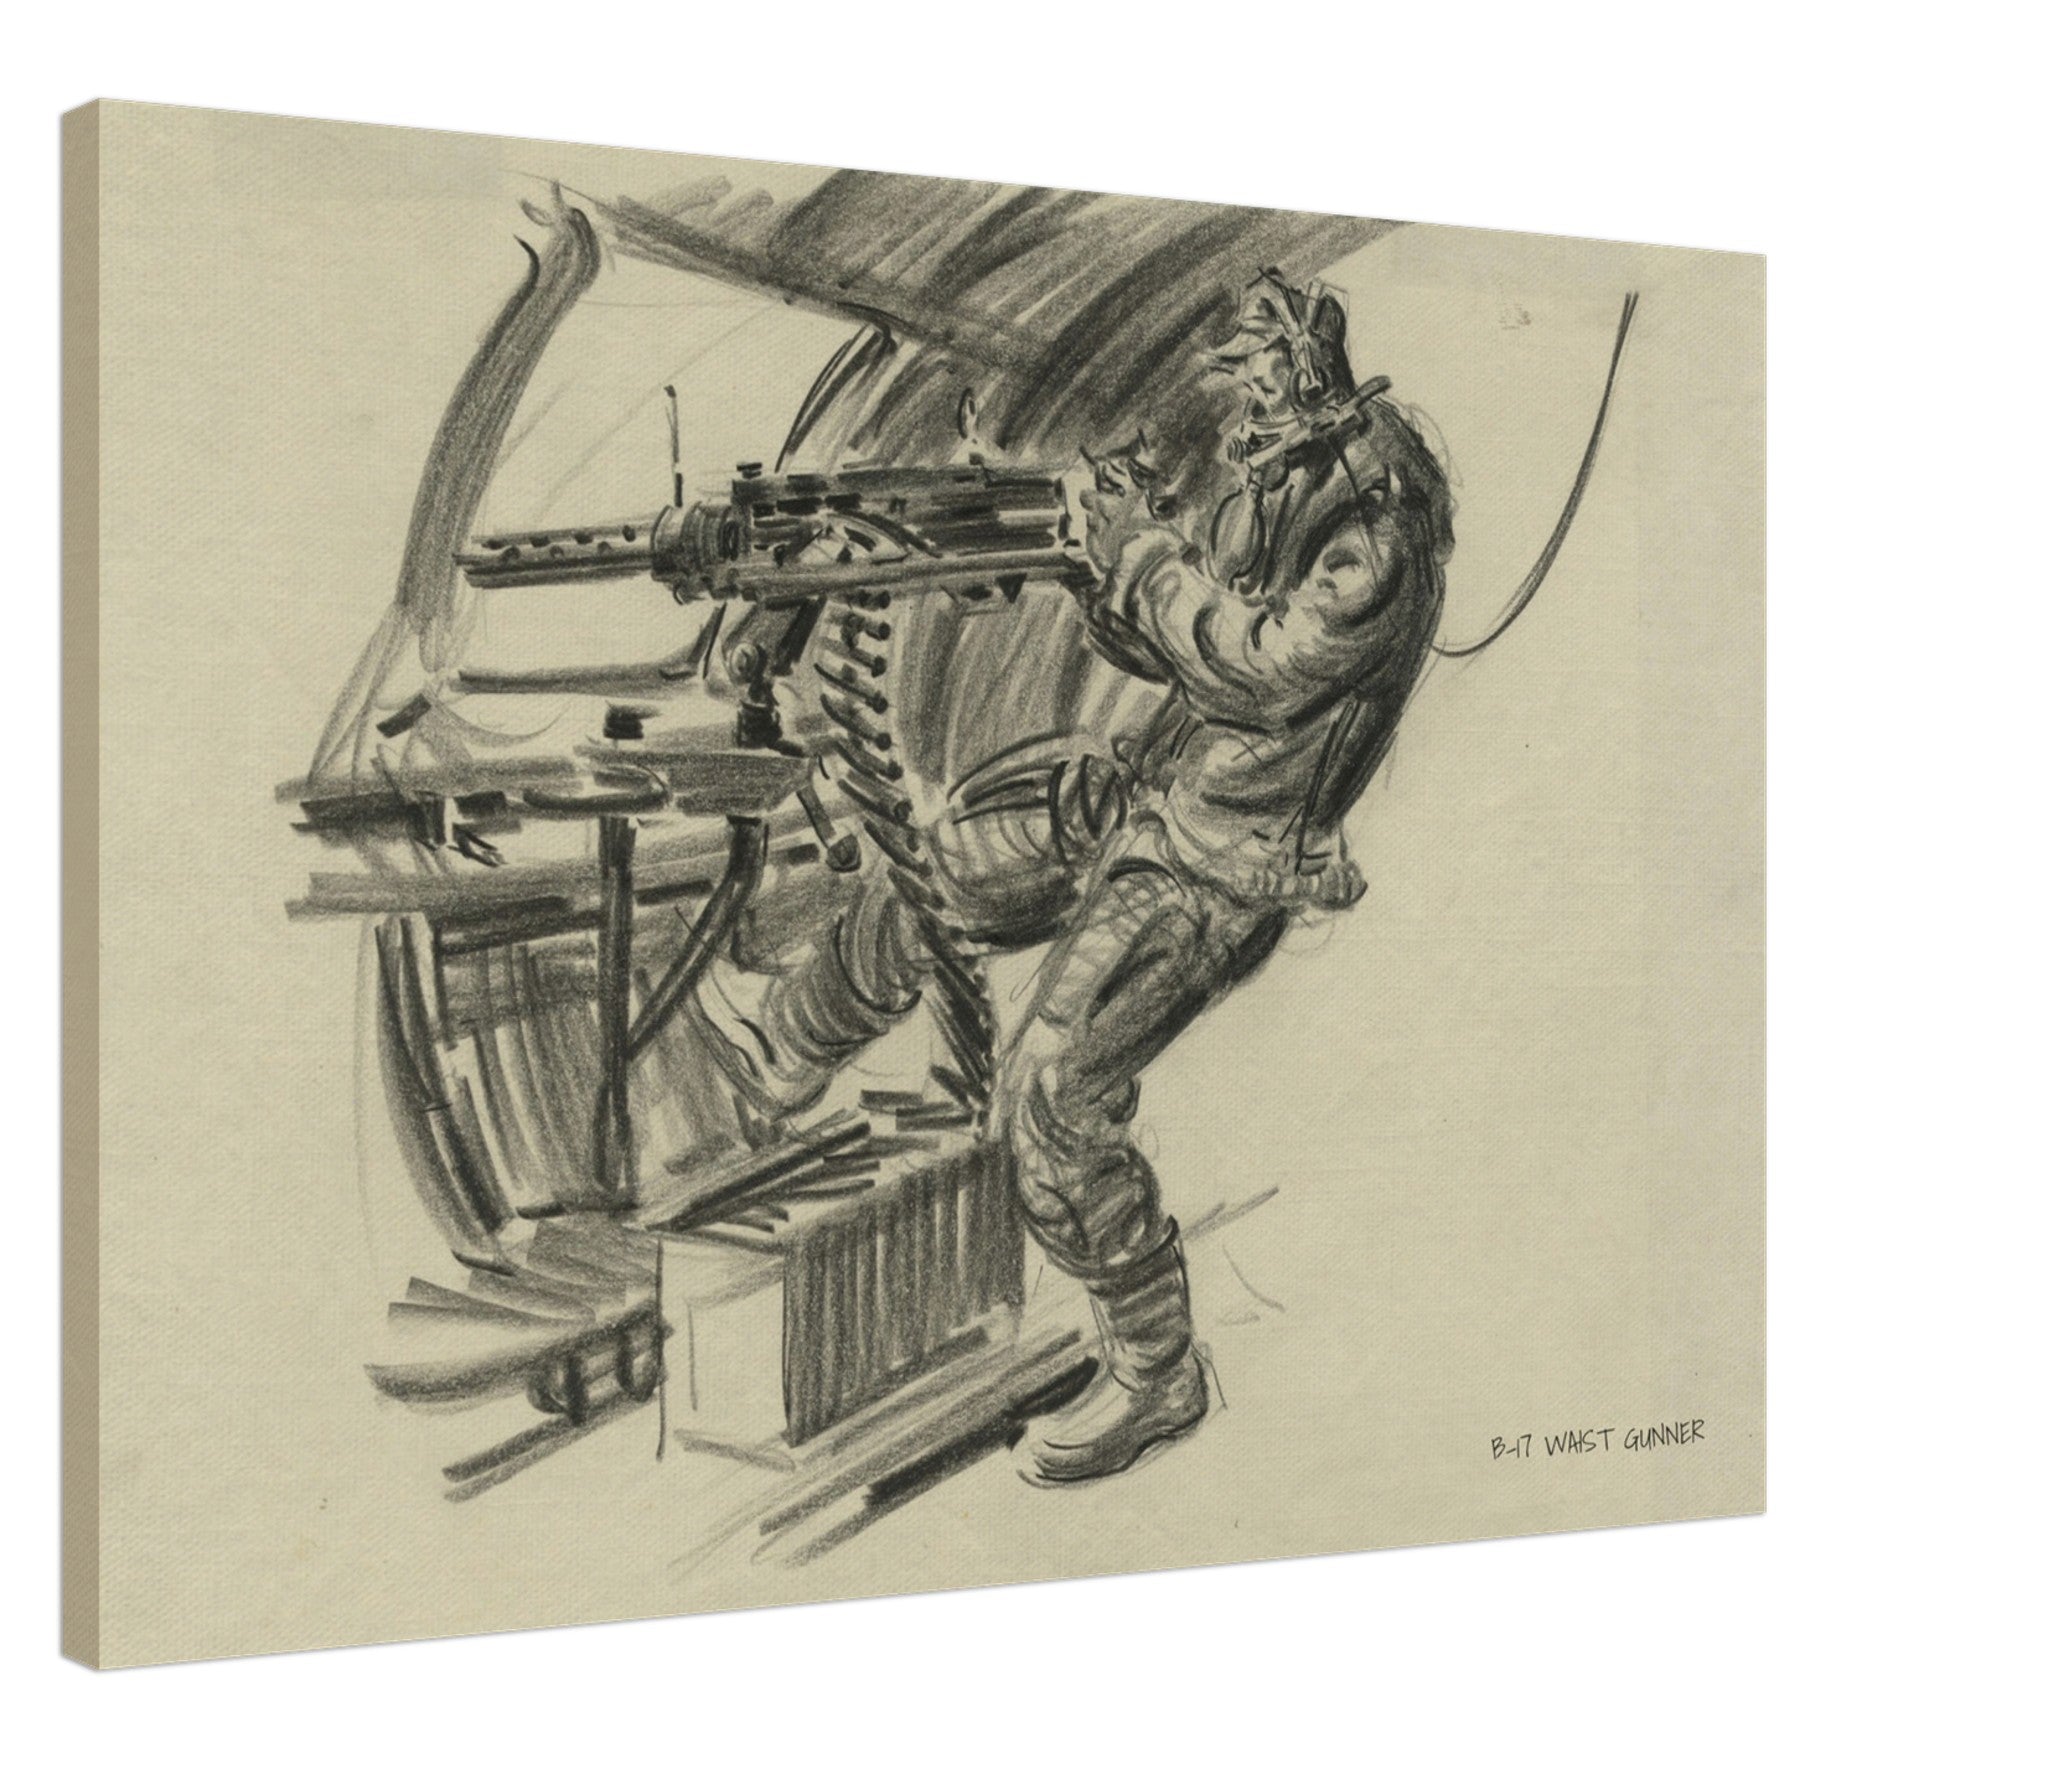 B-17 "Waist Gunner" Reproduction Charcoal Sketch On Canvas - I Love a Hangar